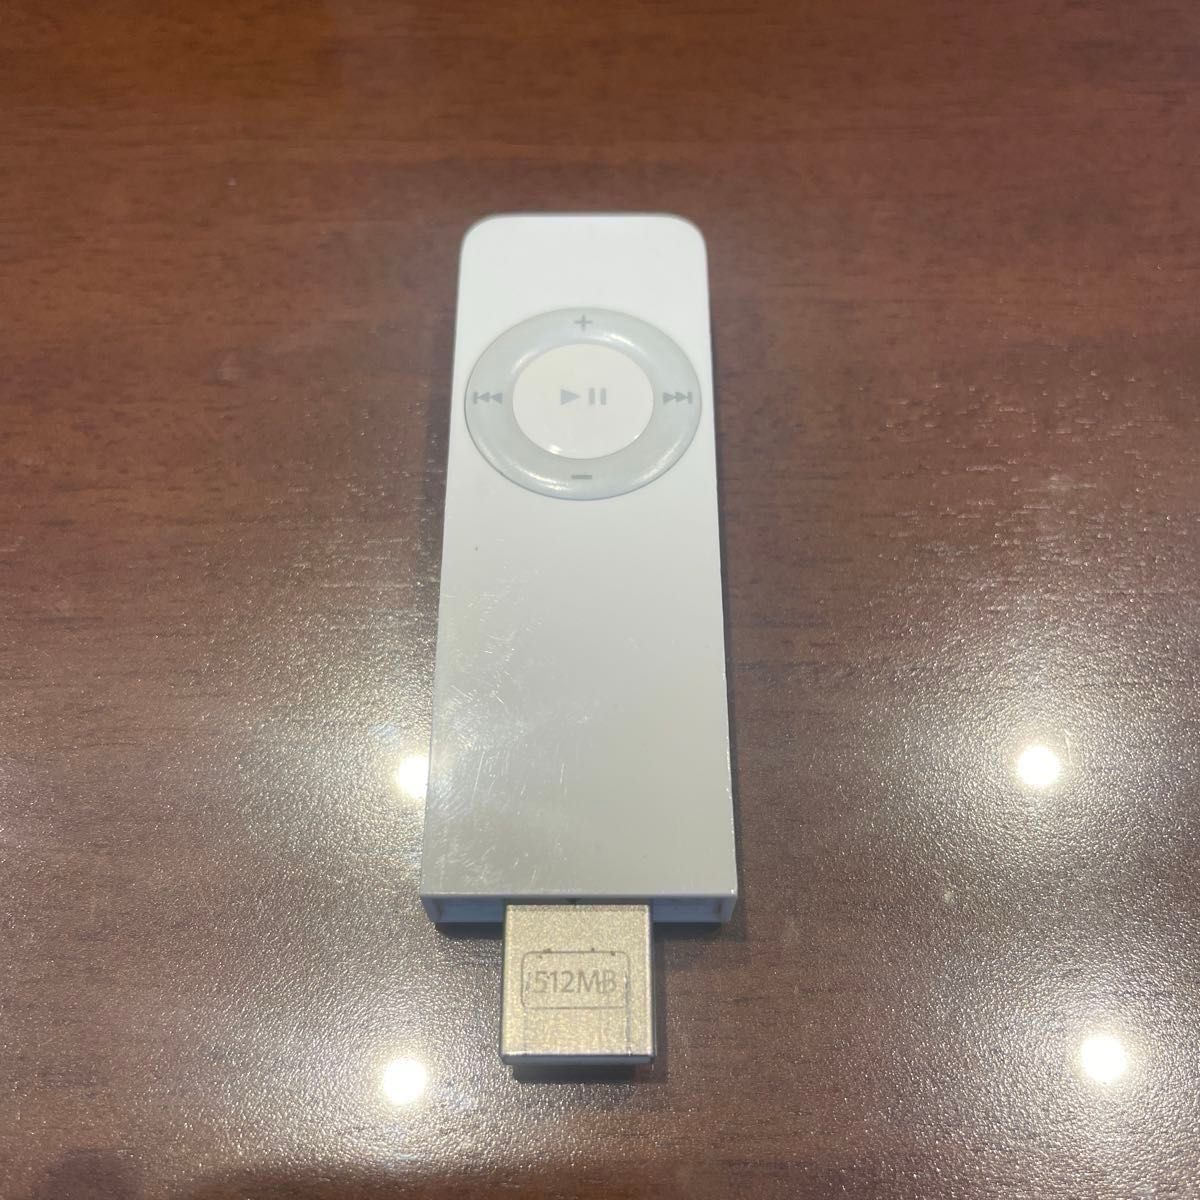 iPod shuffle 初代 512MB (本体＋ネックストラップ)